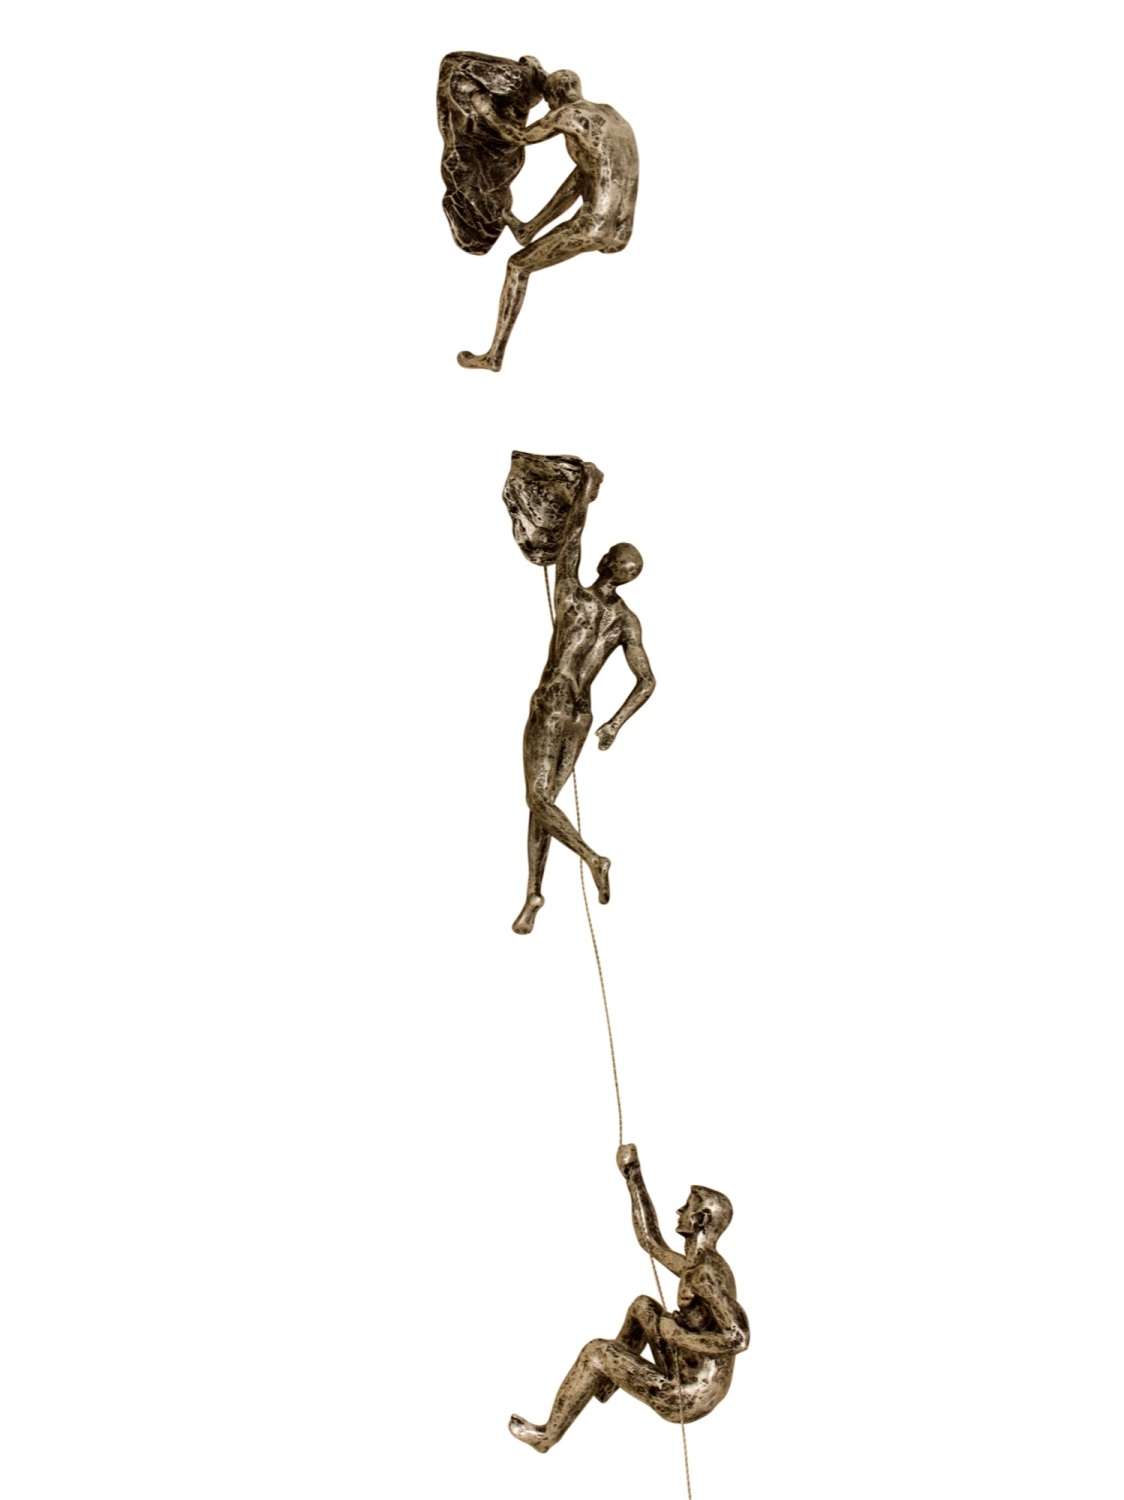 3x Rock Climber Figurines in Bronze Colour 